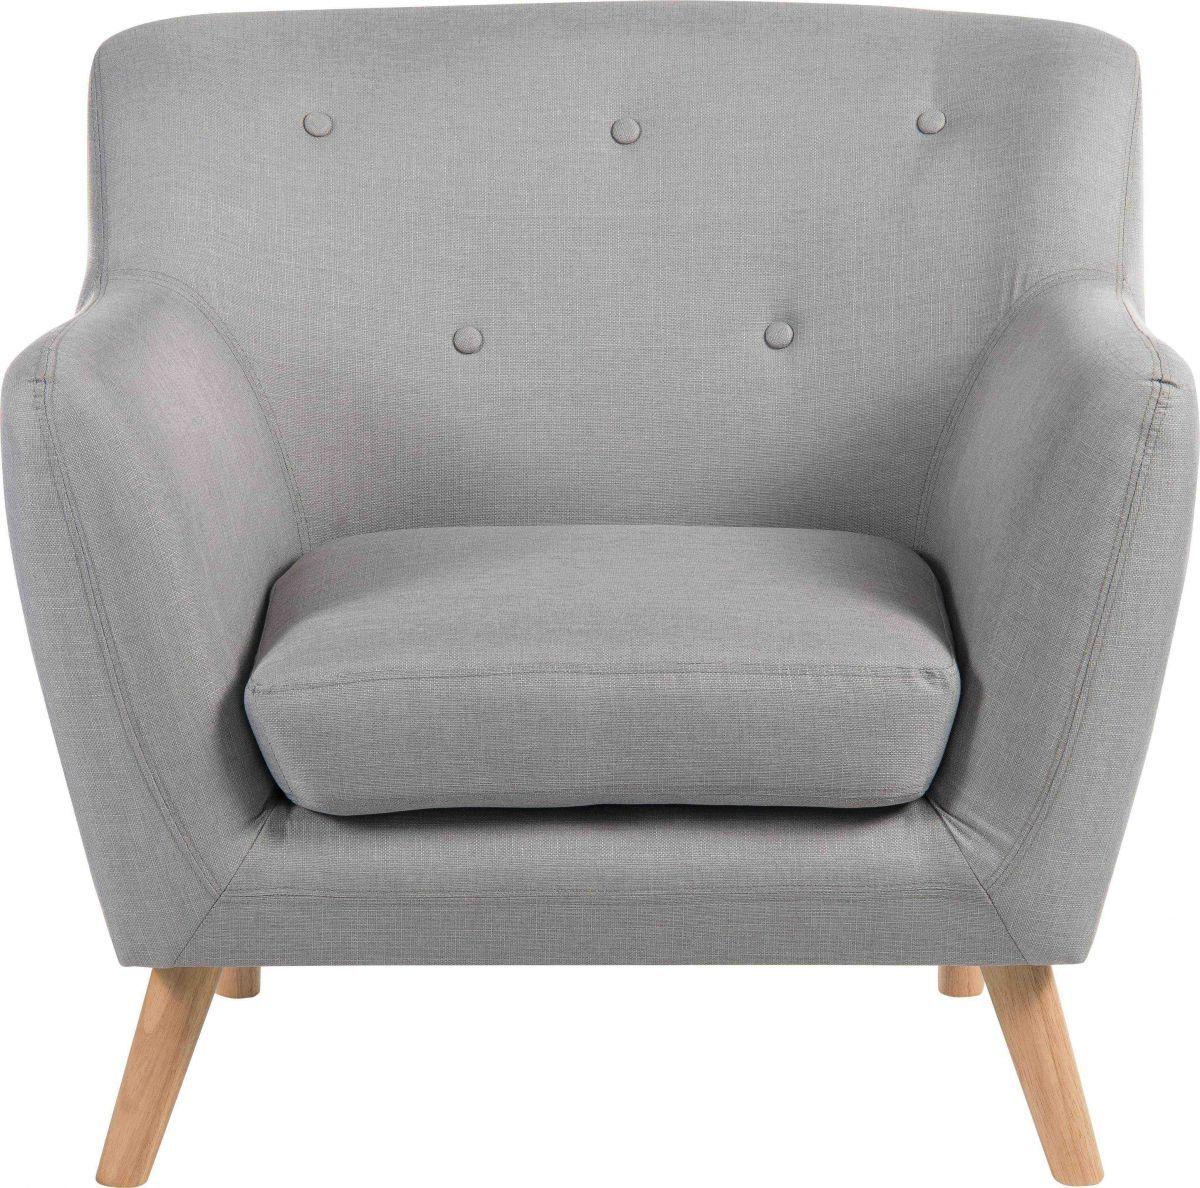 Skandi armchair - crimblefest furniture - image 2